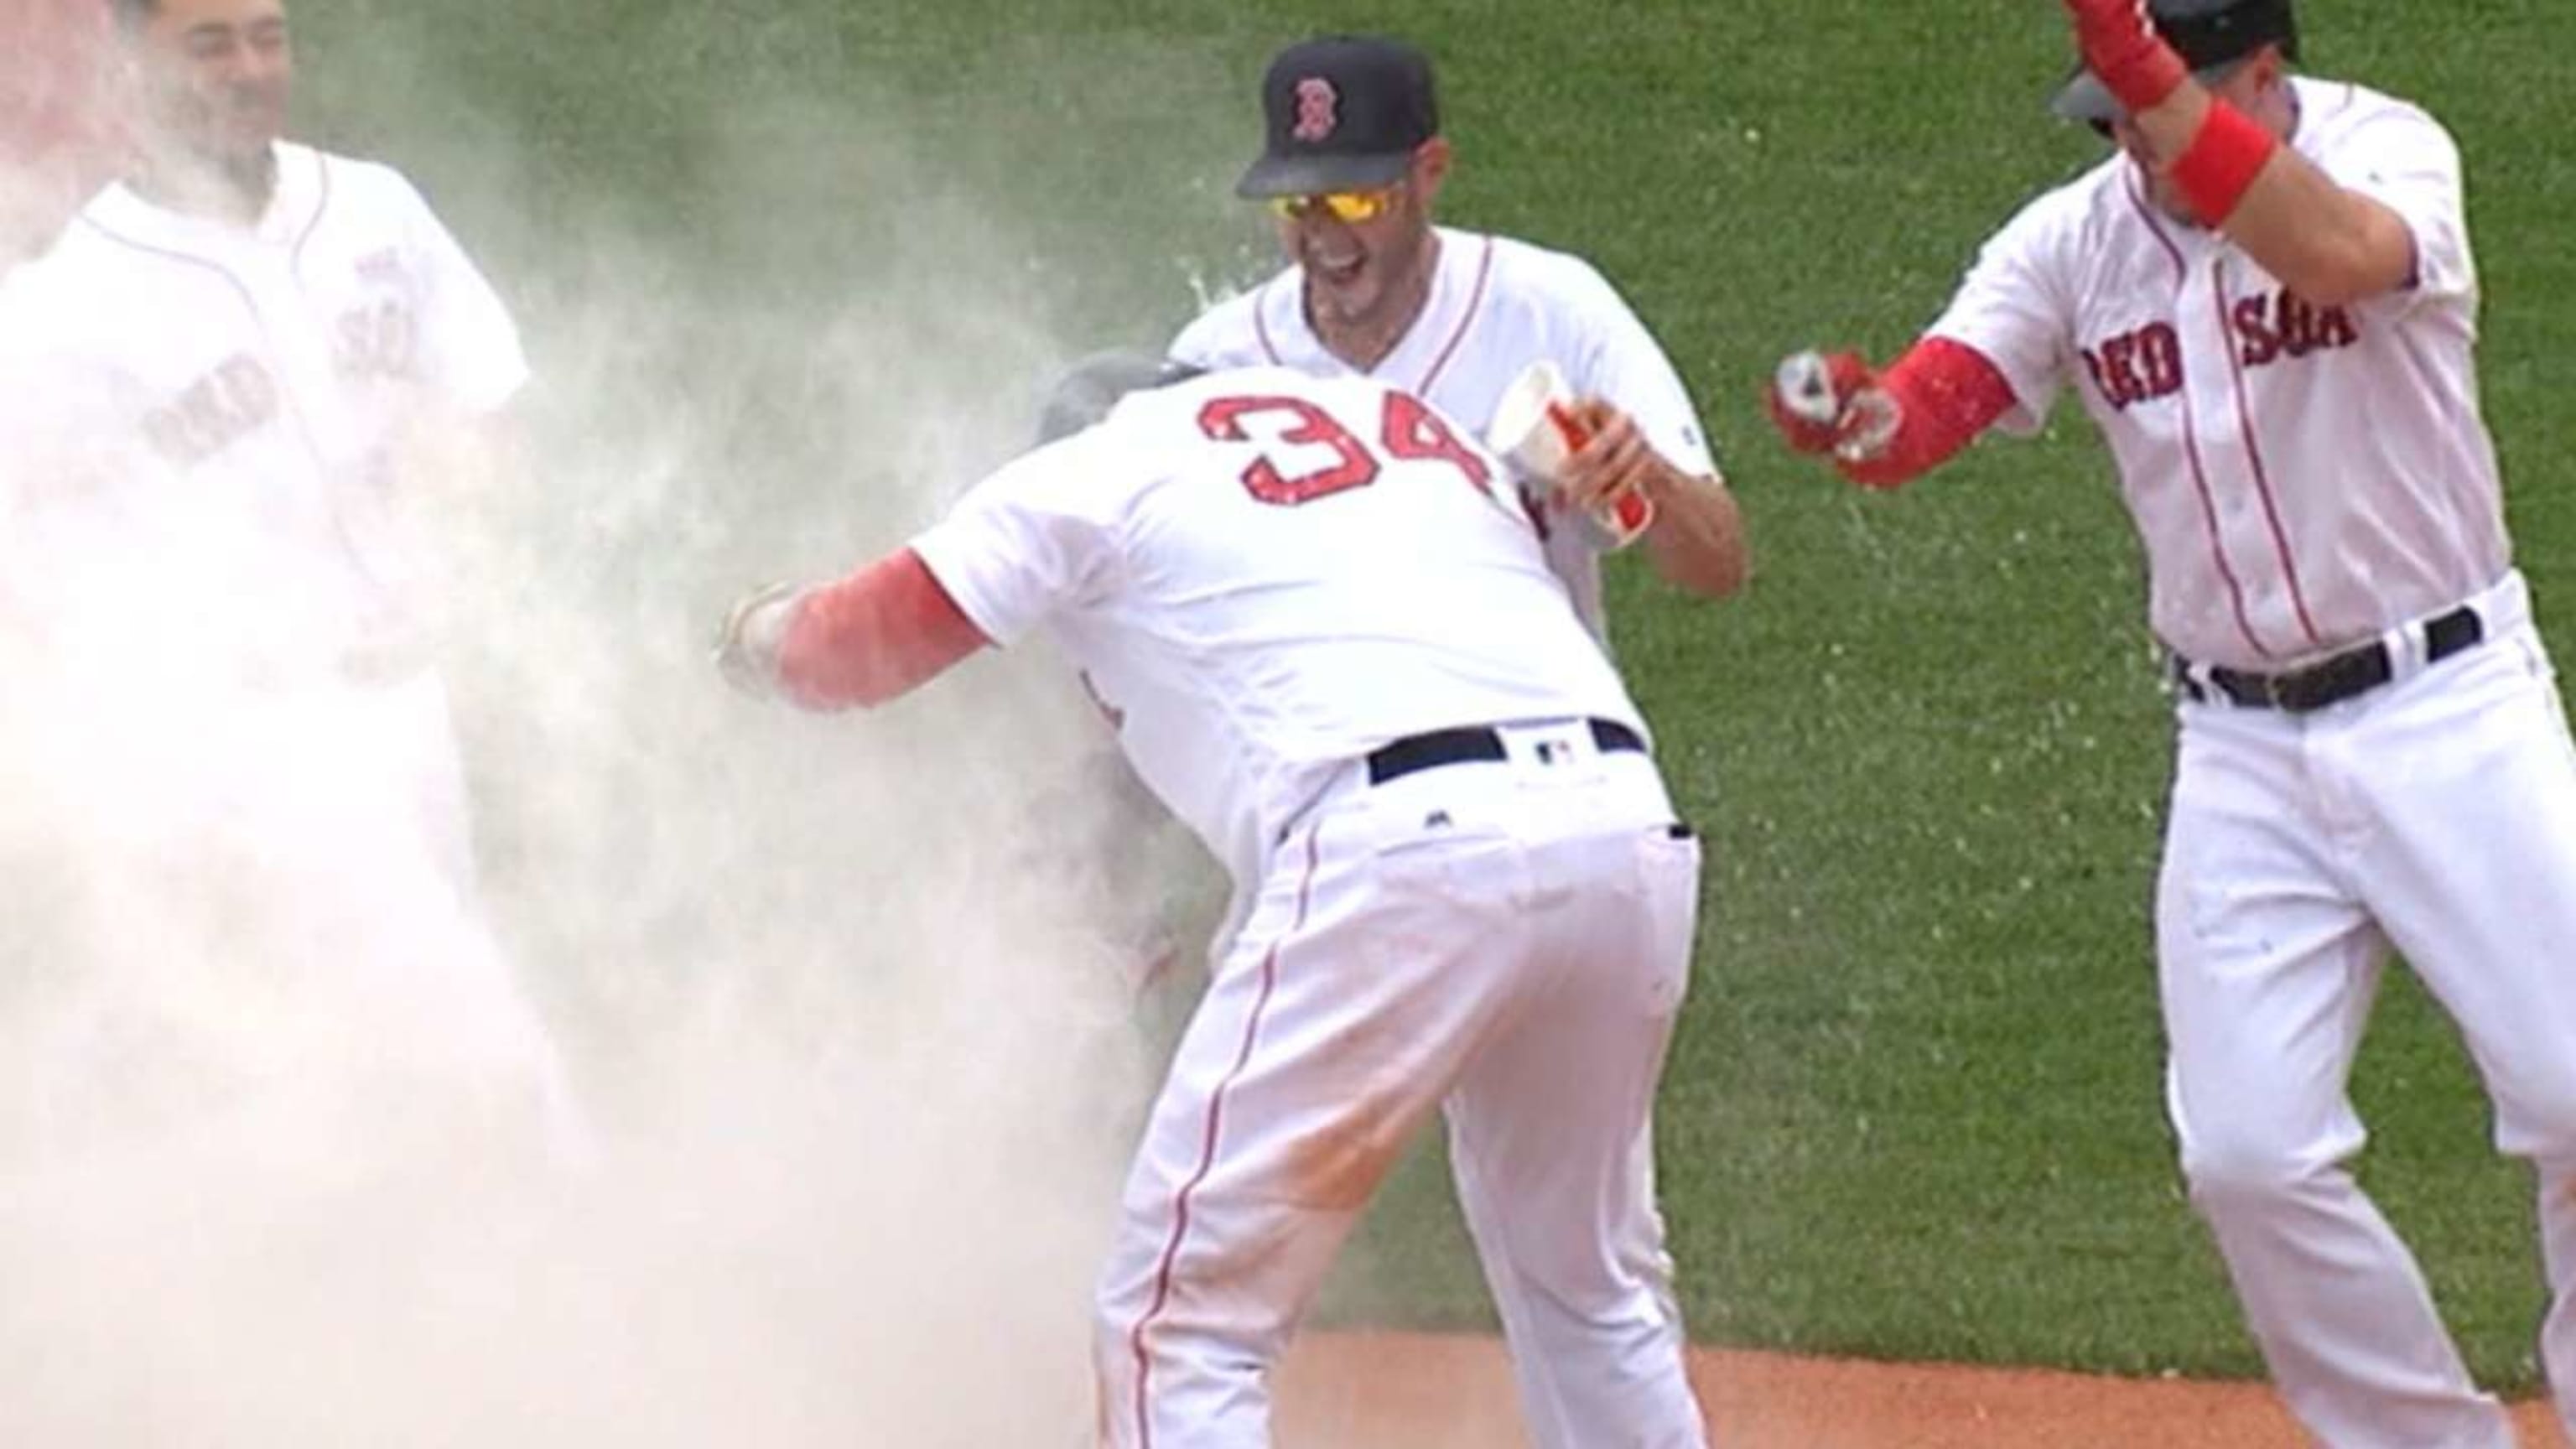 Red Sox slugger David Ortiz hits 500th career homer